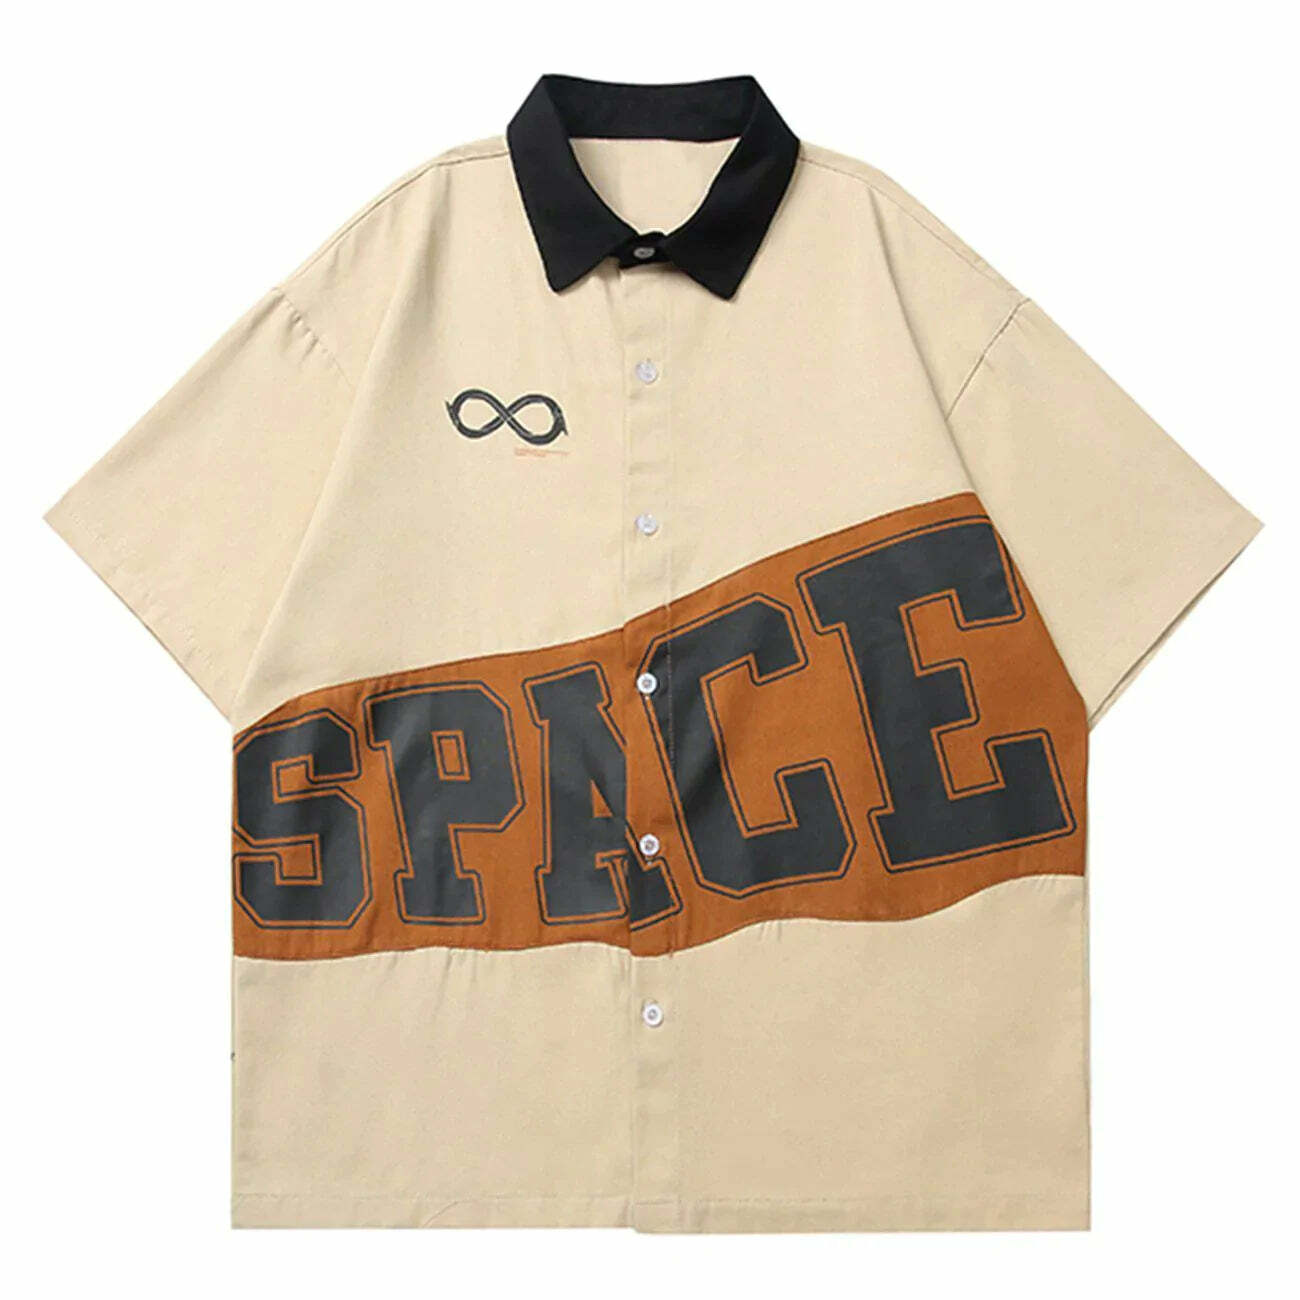 spaceinspired patchwork shirt edgy y2k fashion statement 6096